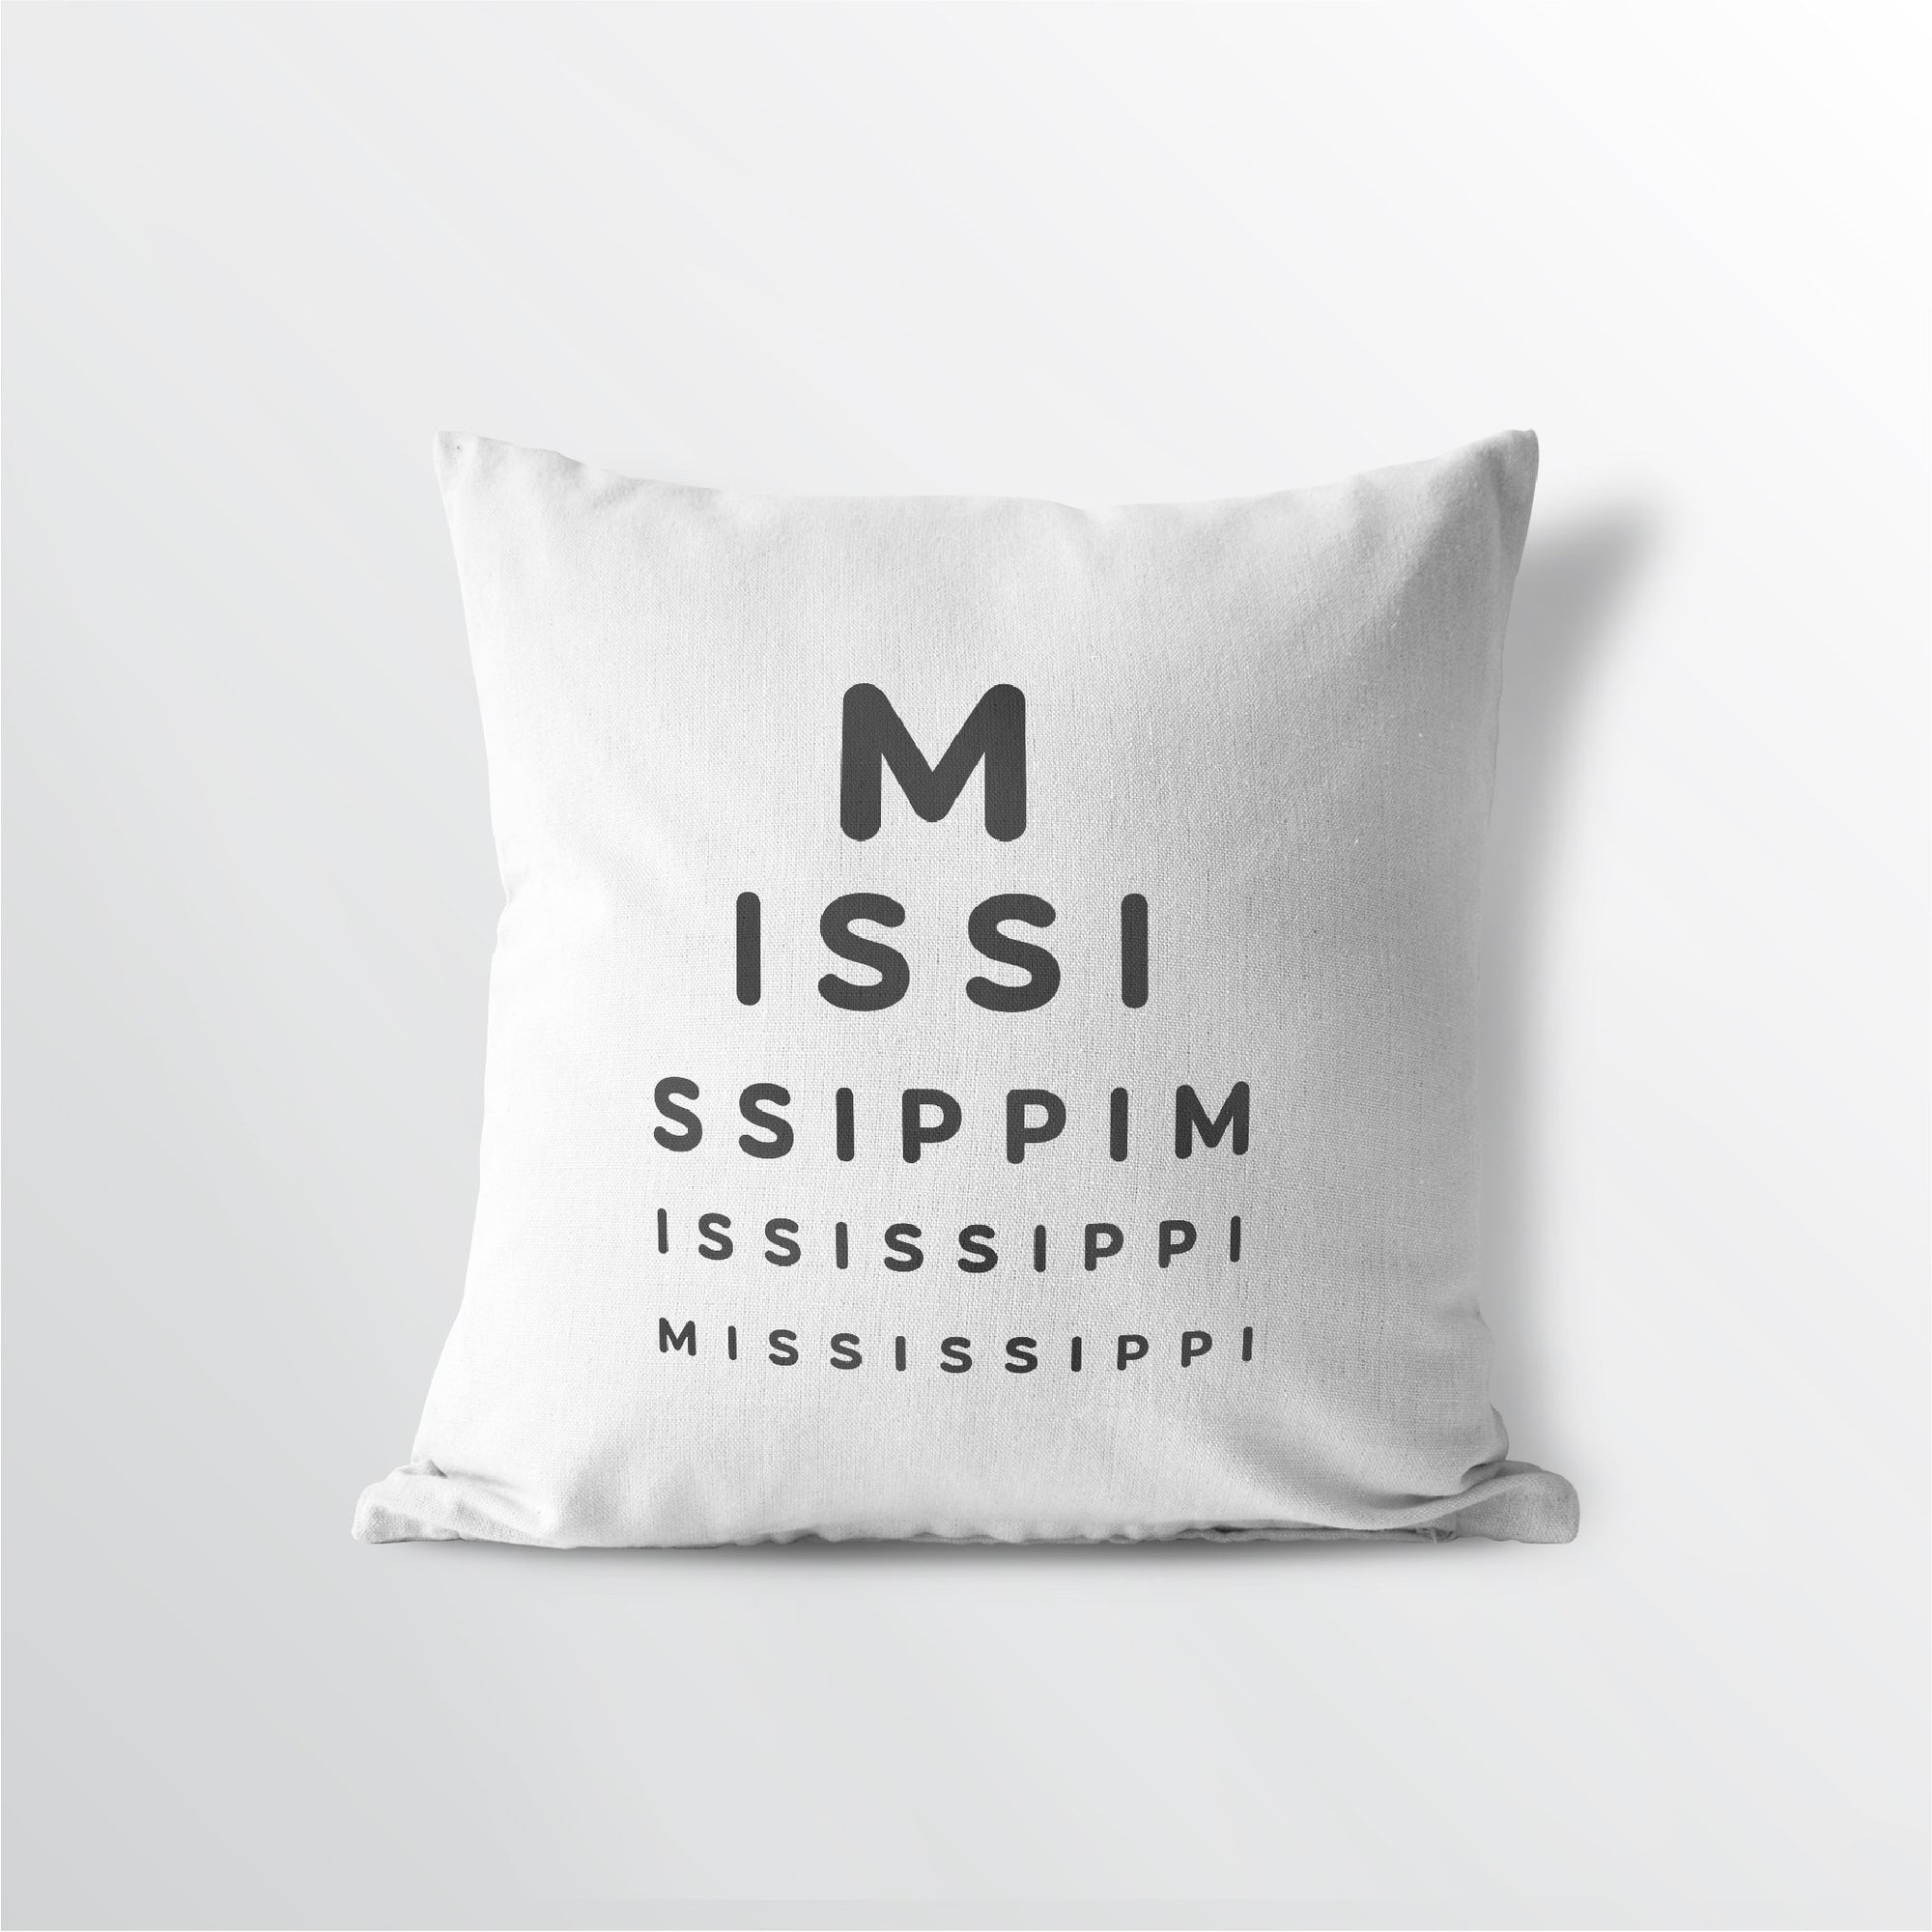 Mississippi "Eye Exam" Throw Pillow